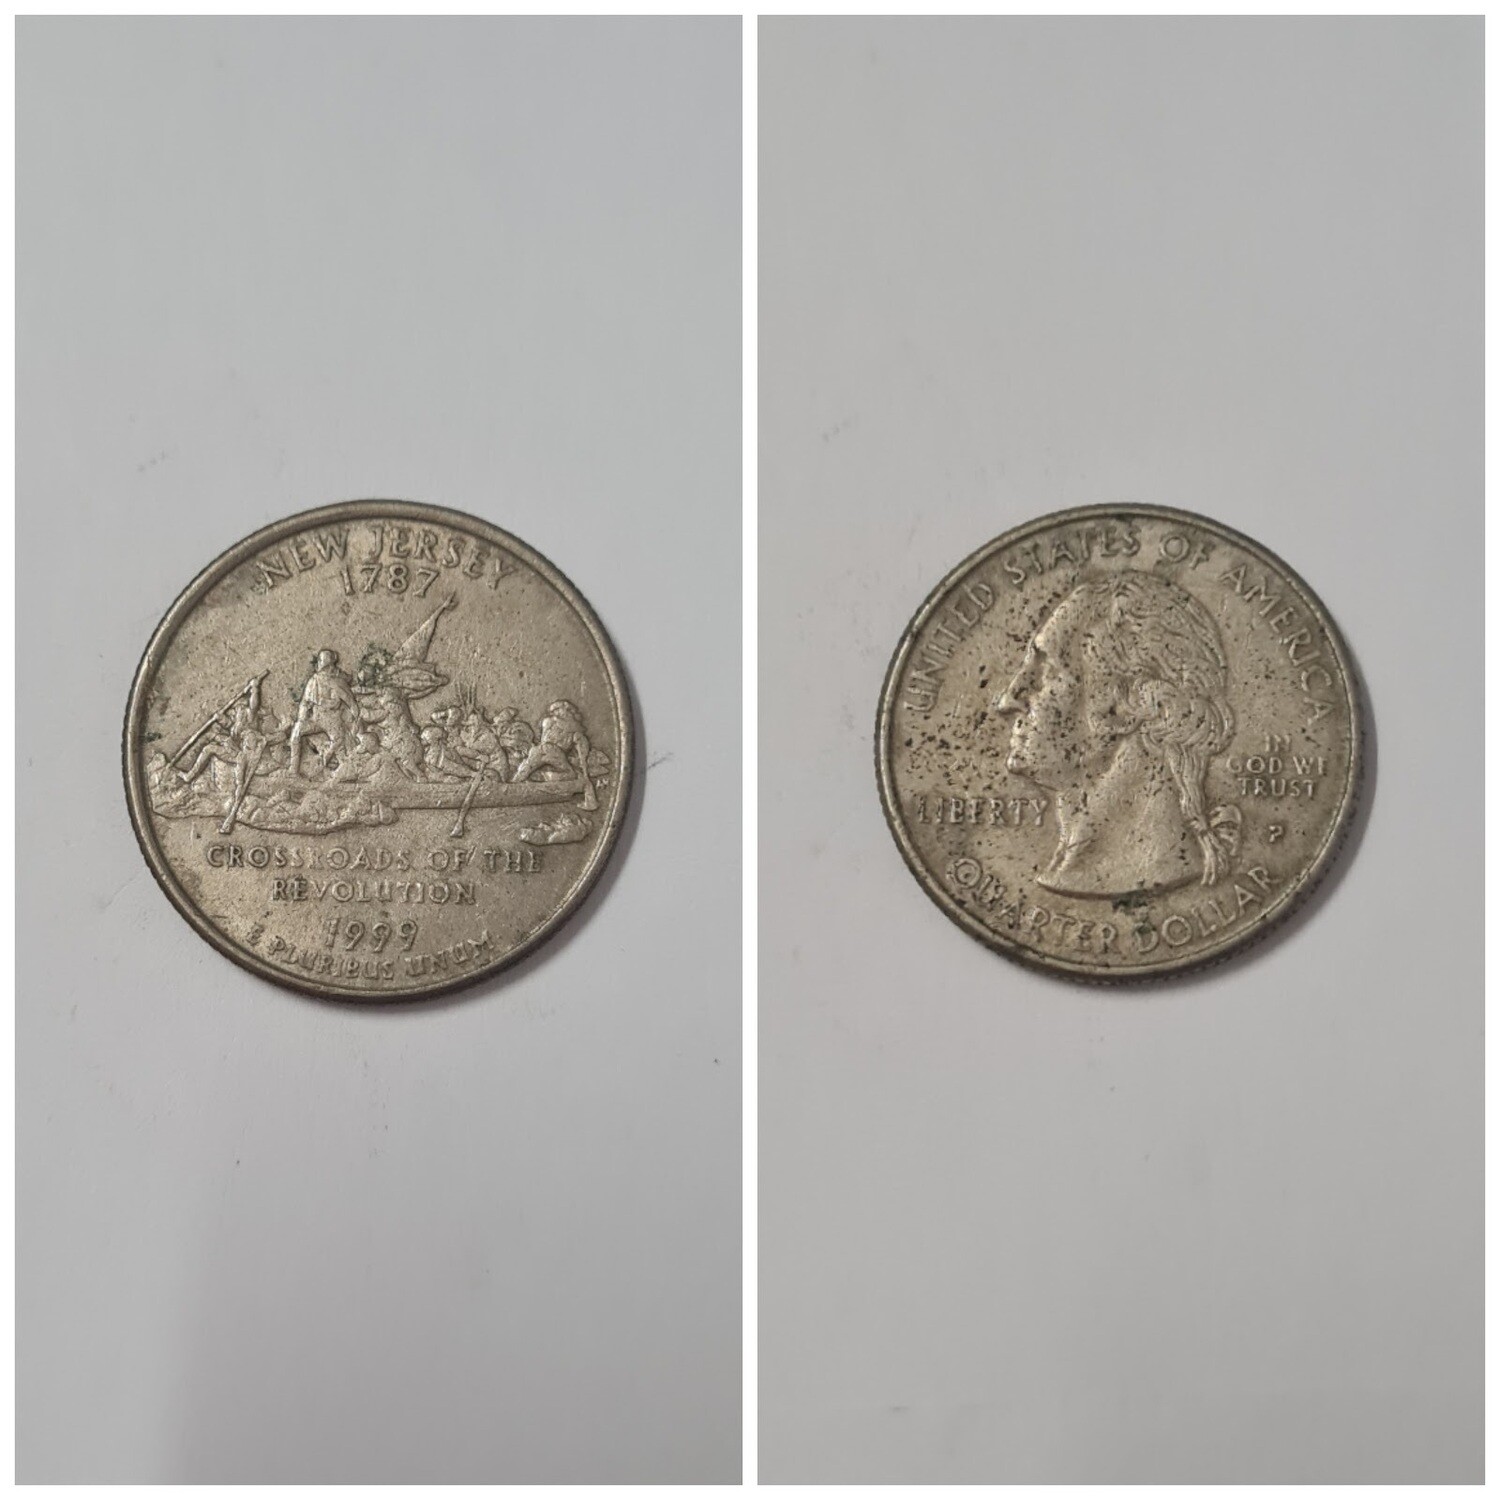 USA 1/4 DOLLAR NEW JERSEY 1999